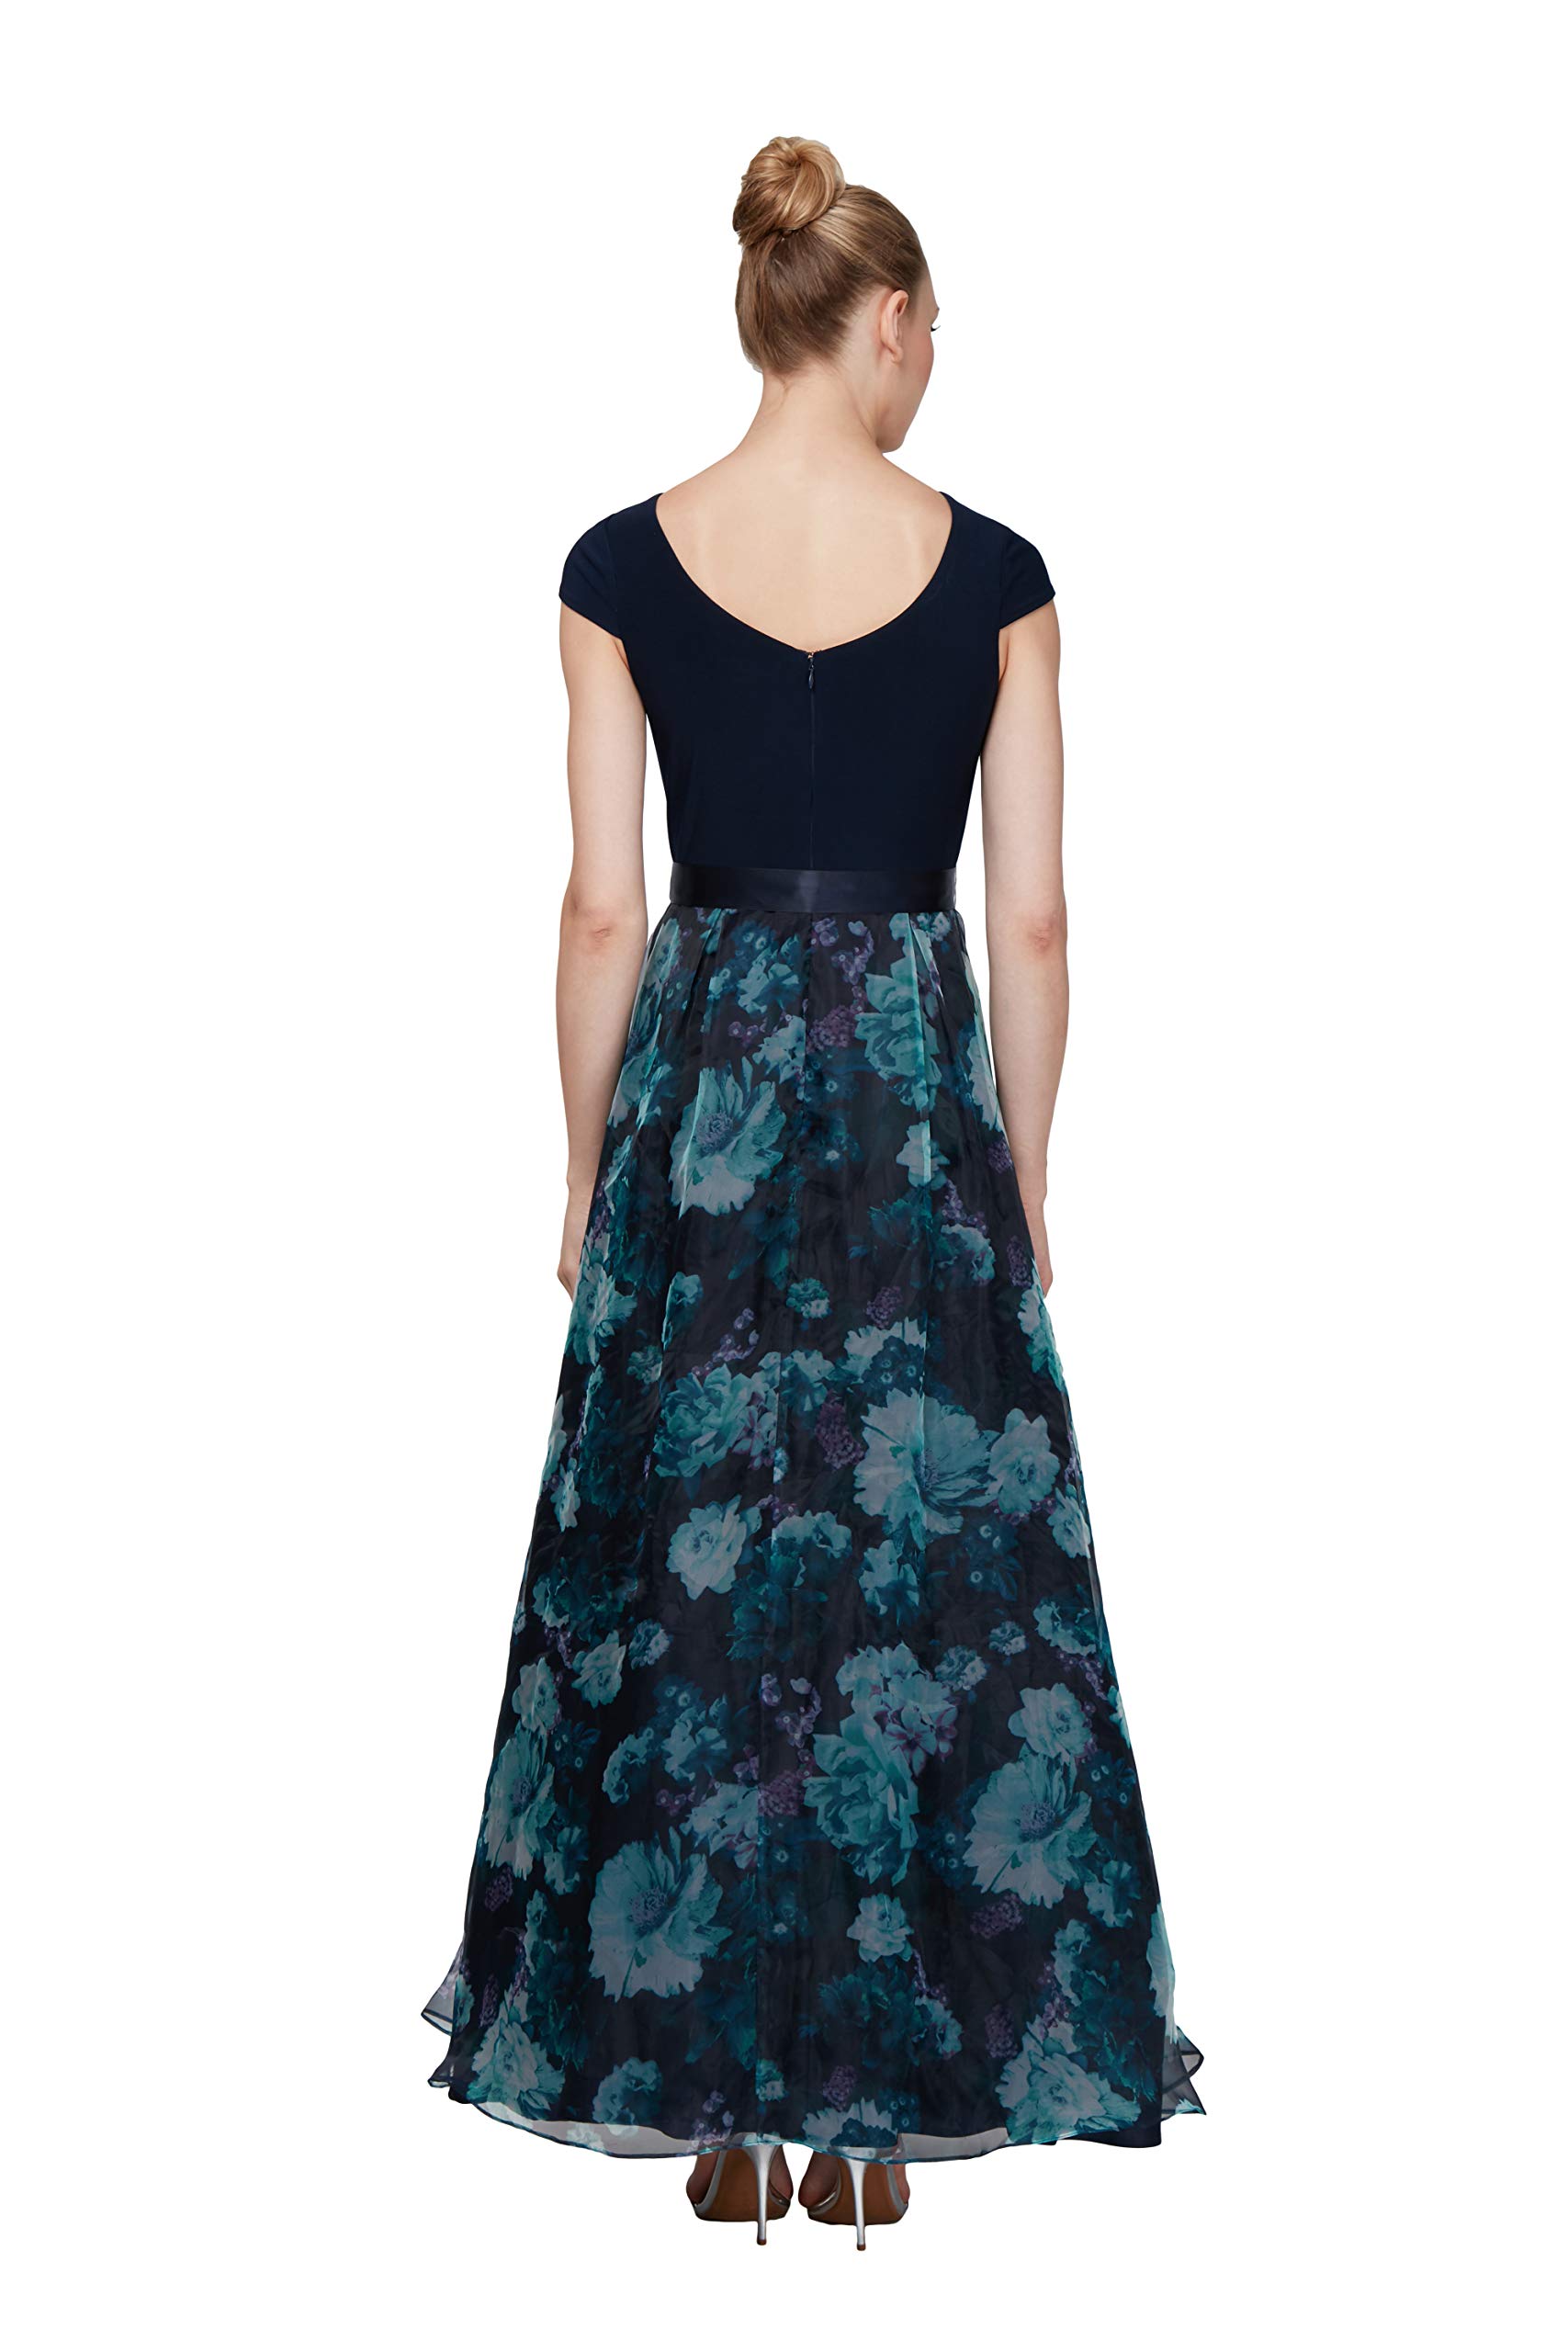 S.L. Fashions Women's Floral Print Skirt Dress 9141141